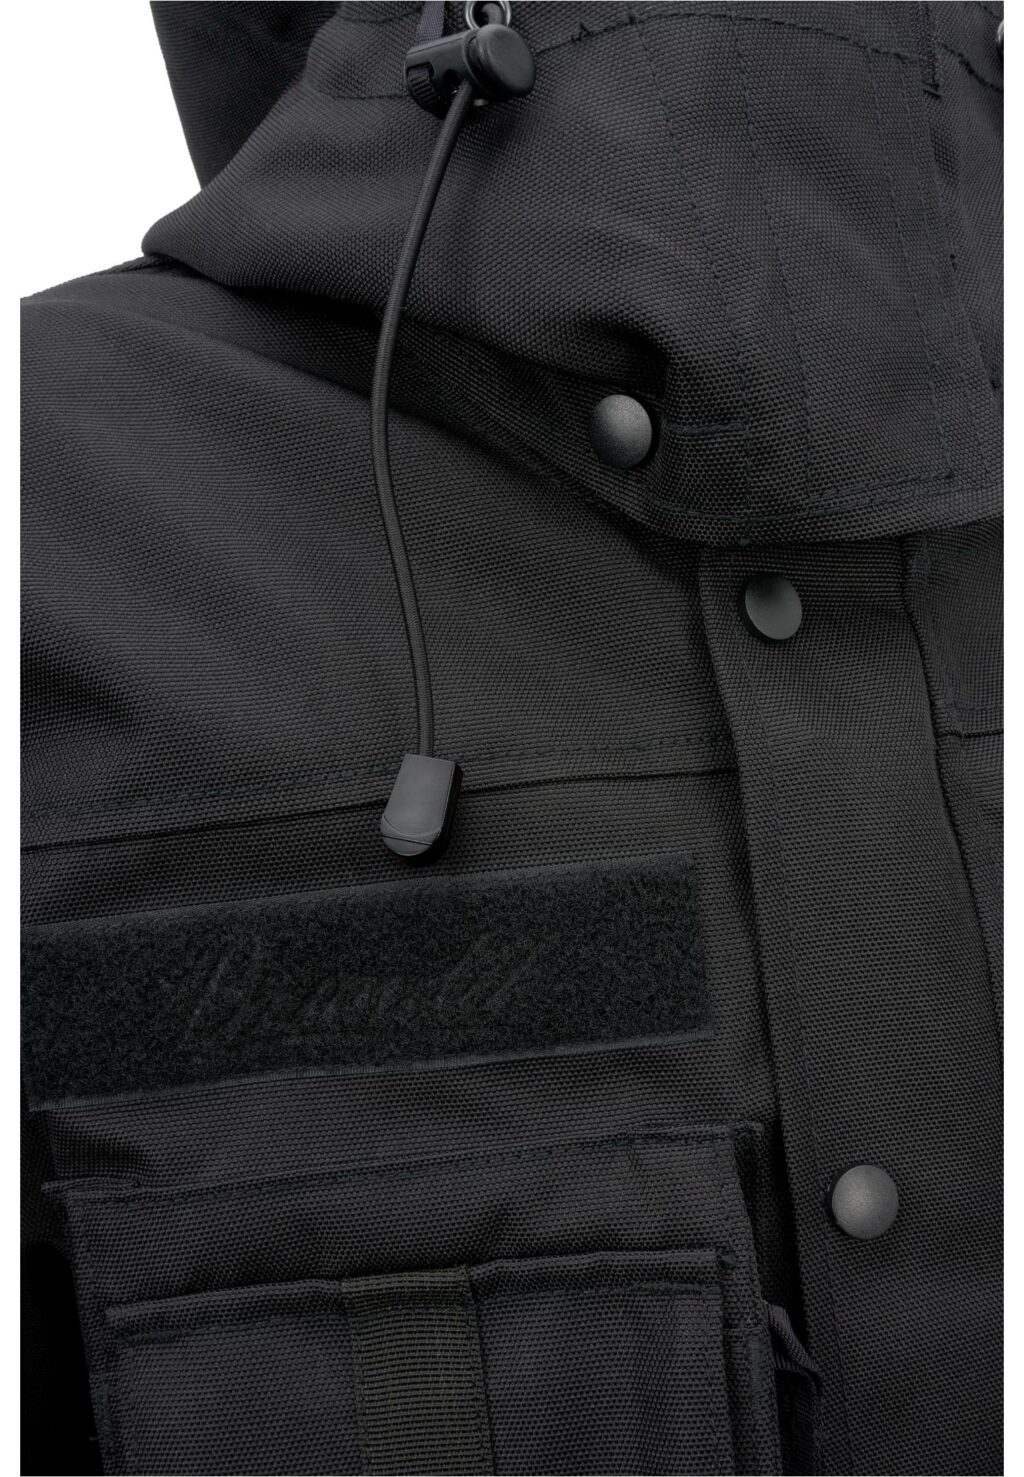 Brandit Performance Outdoorjacket black BD3170